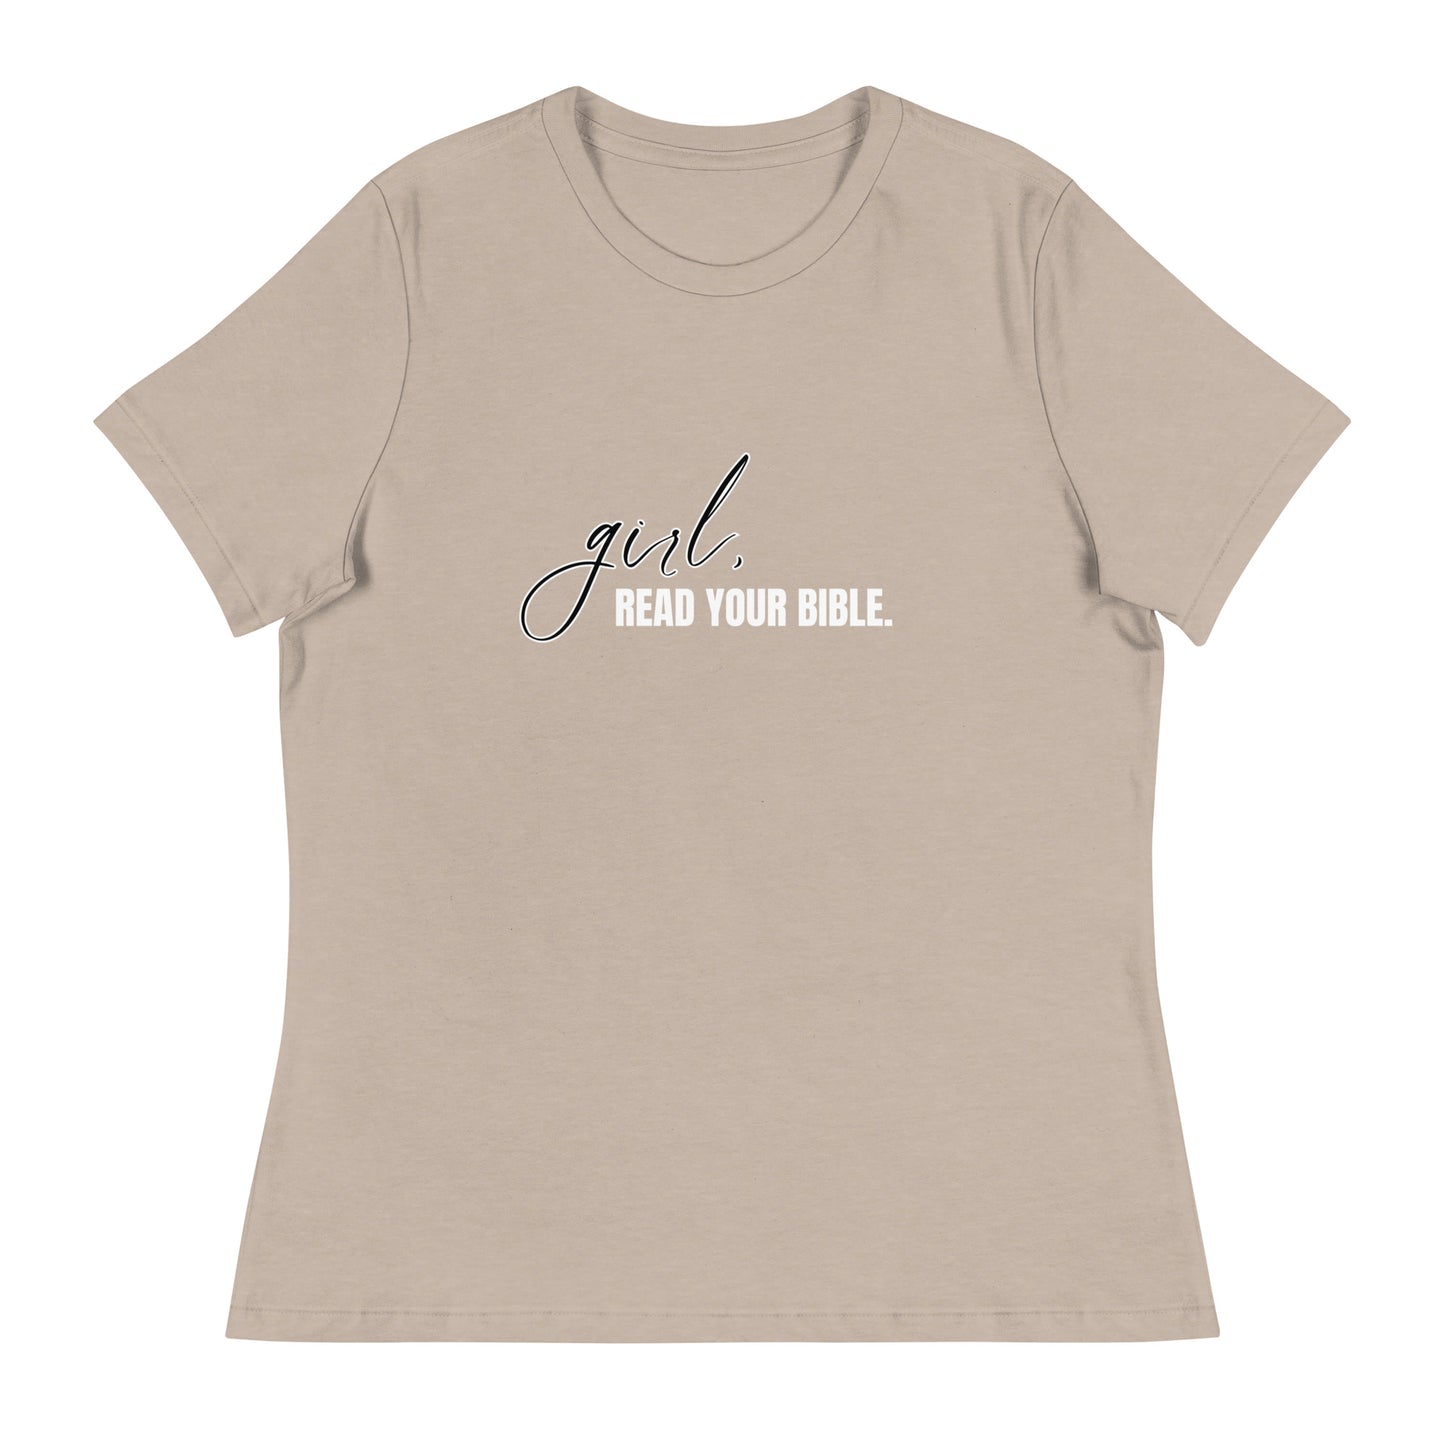 Girl, Read. Your Bible - Women's Relaxed T-Shirt